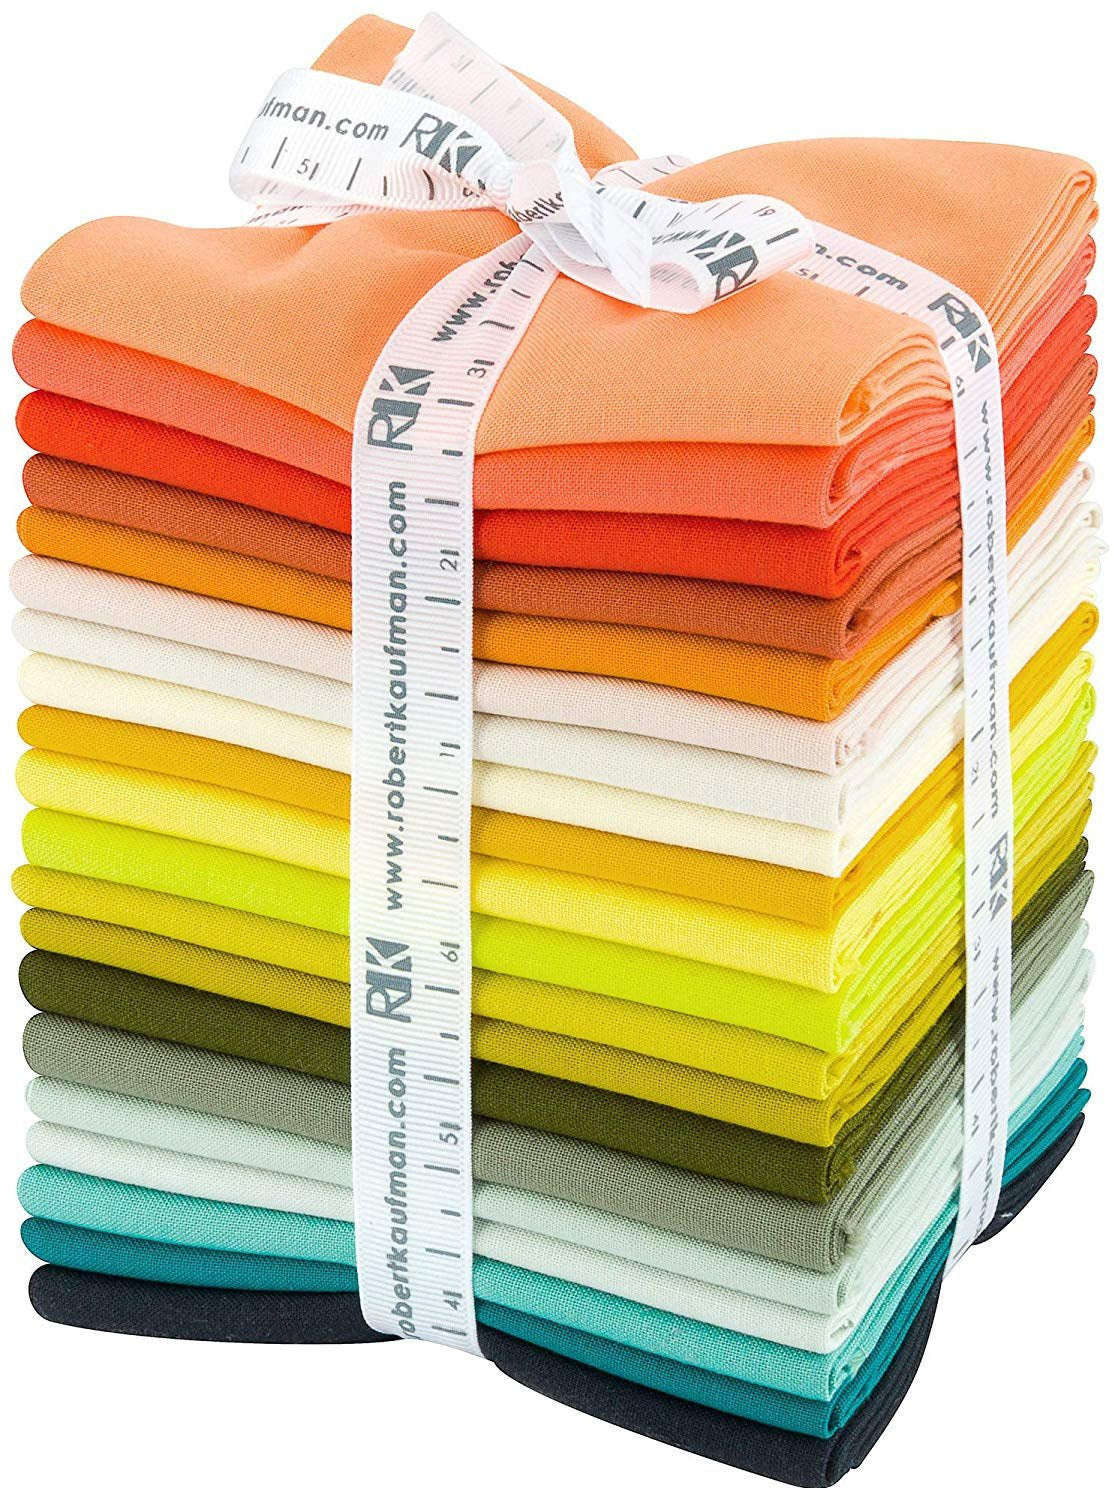 Kona Cotton Solid Fat Quarter Bundle - Elizabeth Hartman Curated - 20pcs - 1475-20